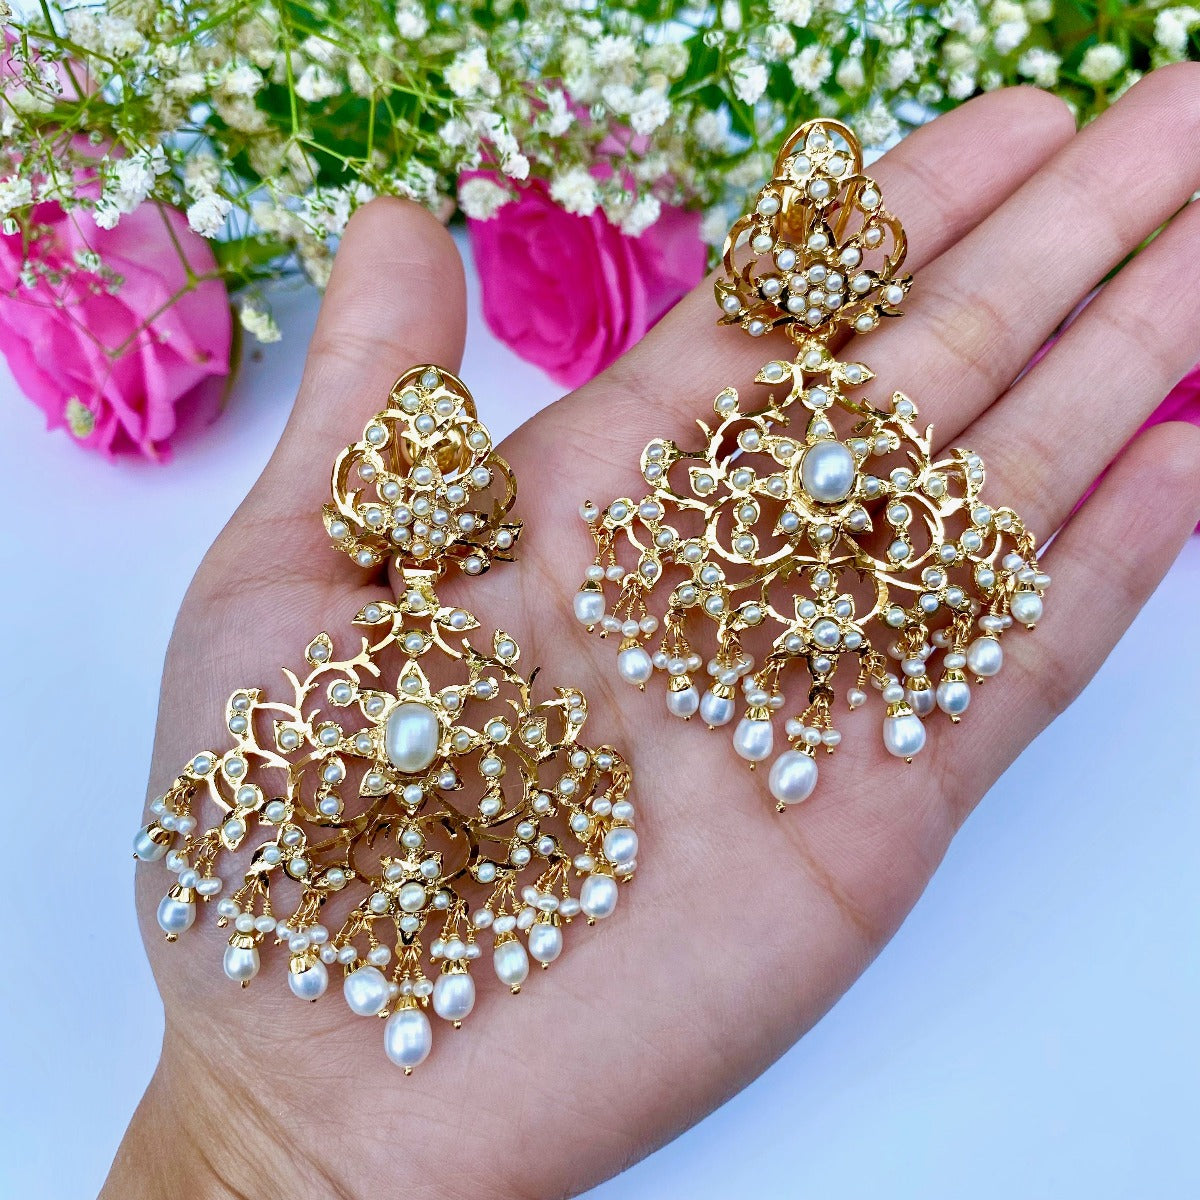 Edwardian Styled Pearl earrings | Handmade Sterling Silver & Seed Pearl Jewelry